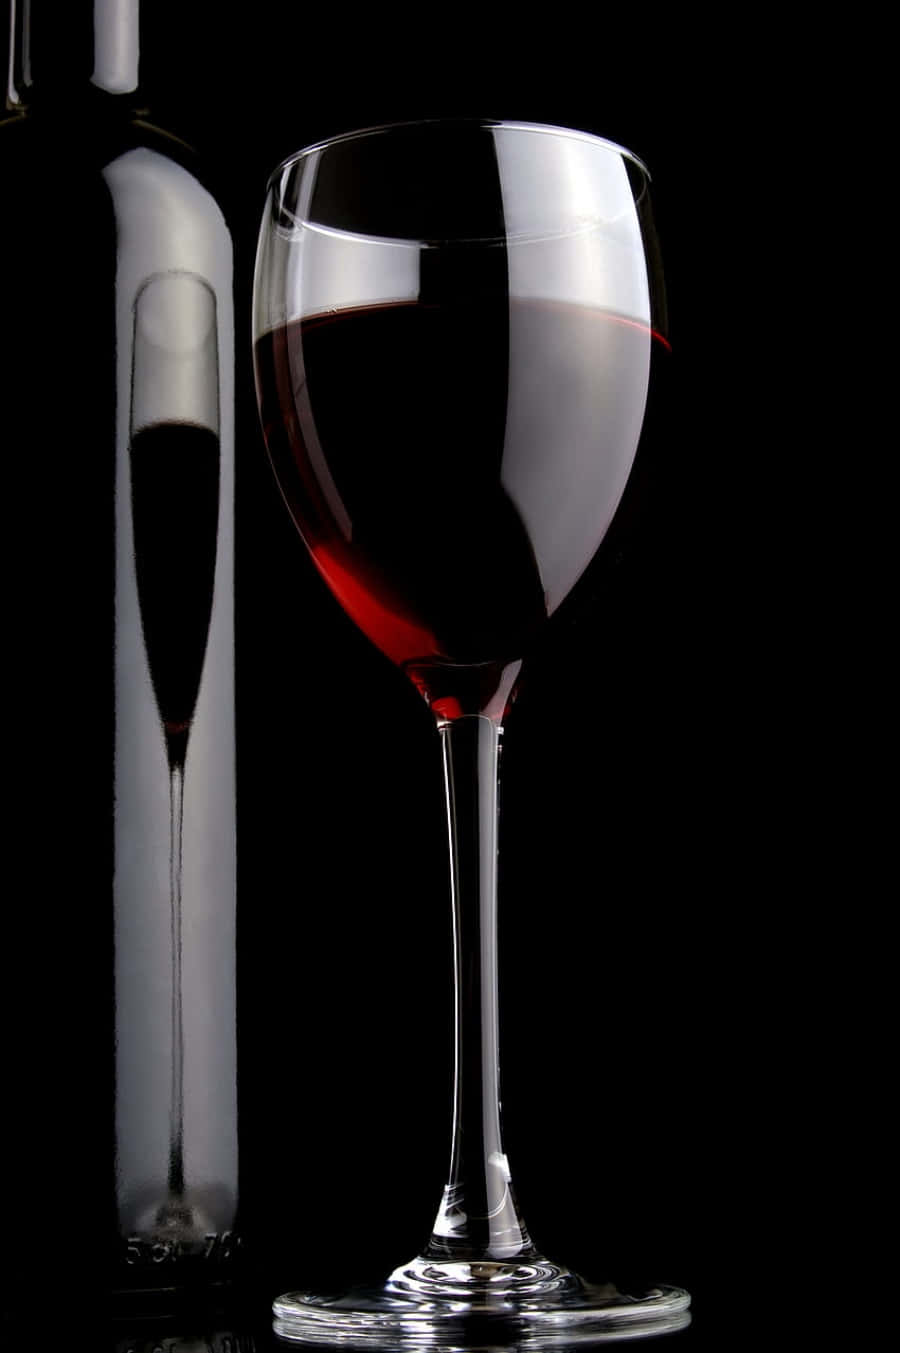 “A tantalising glass of black wine” Wallpaper